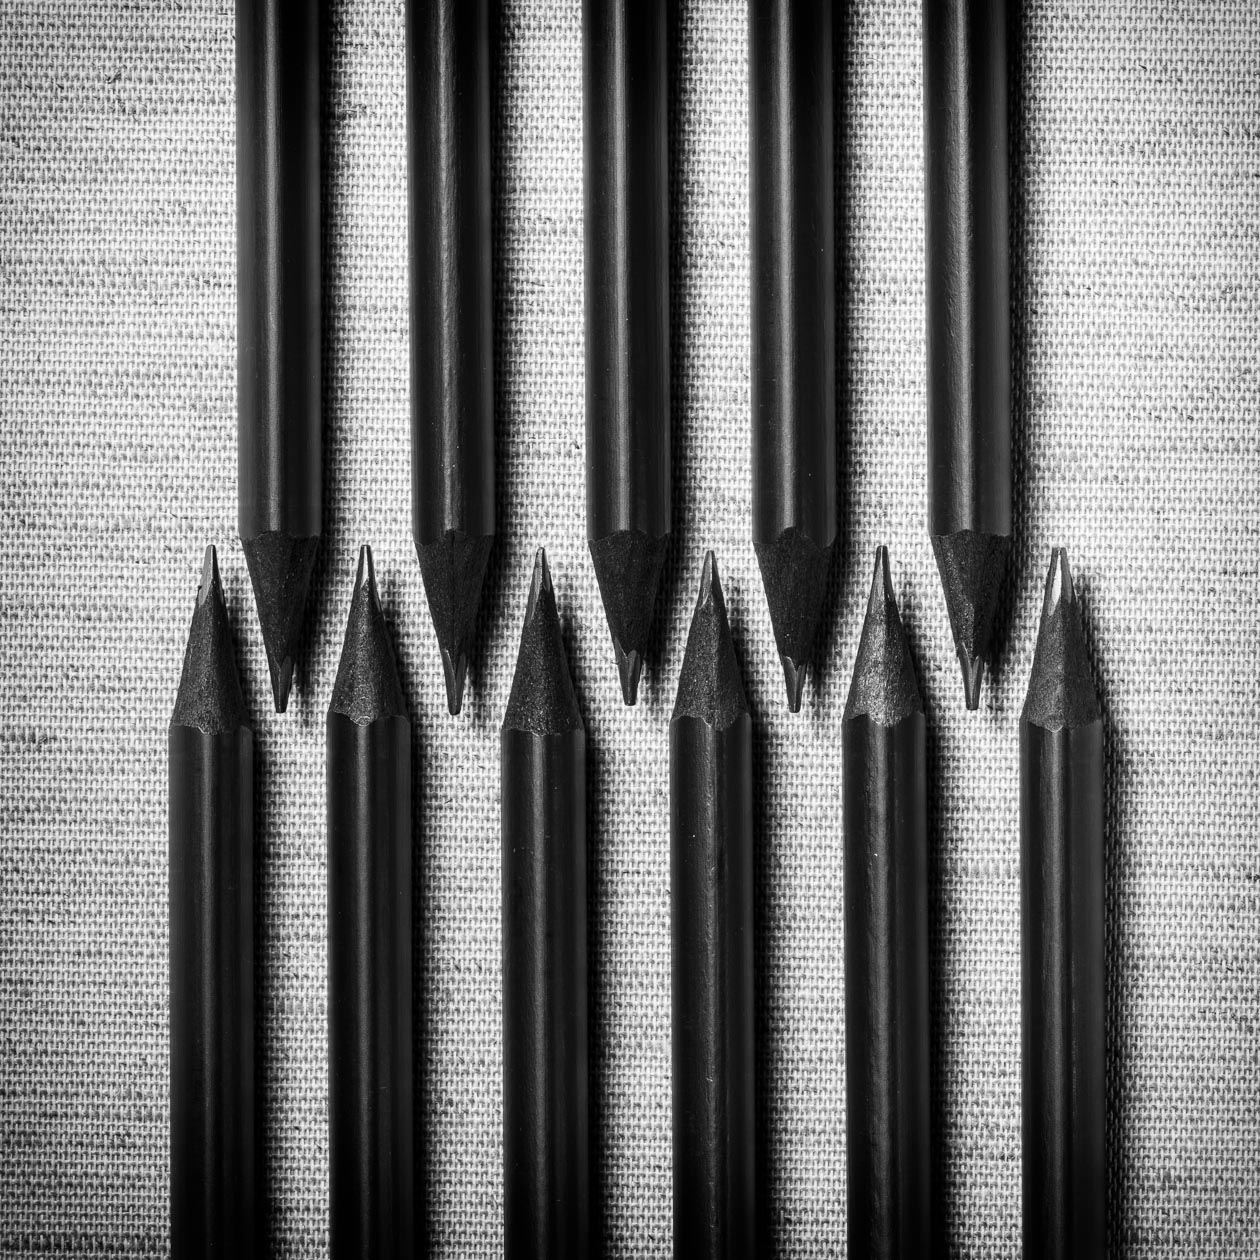 Pencils Concept Alternate Opposition